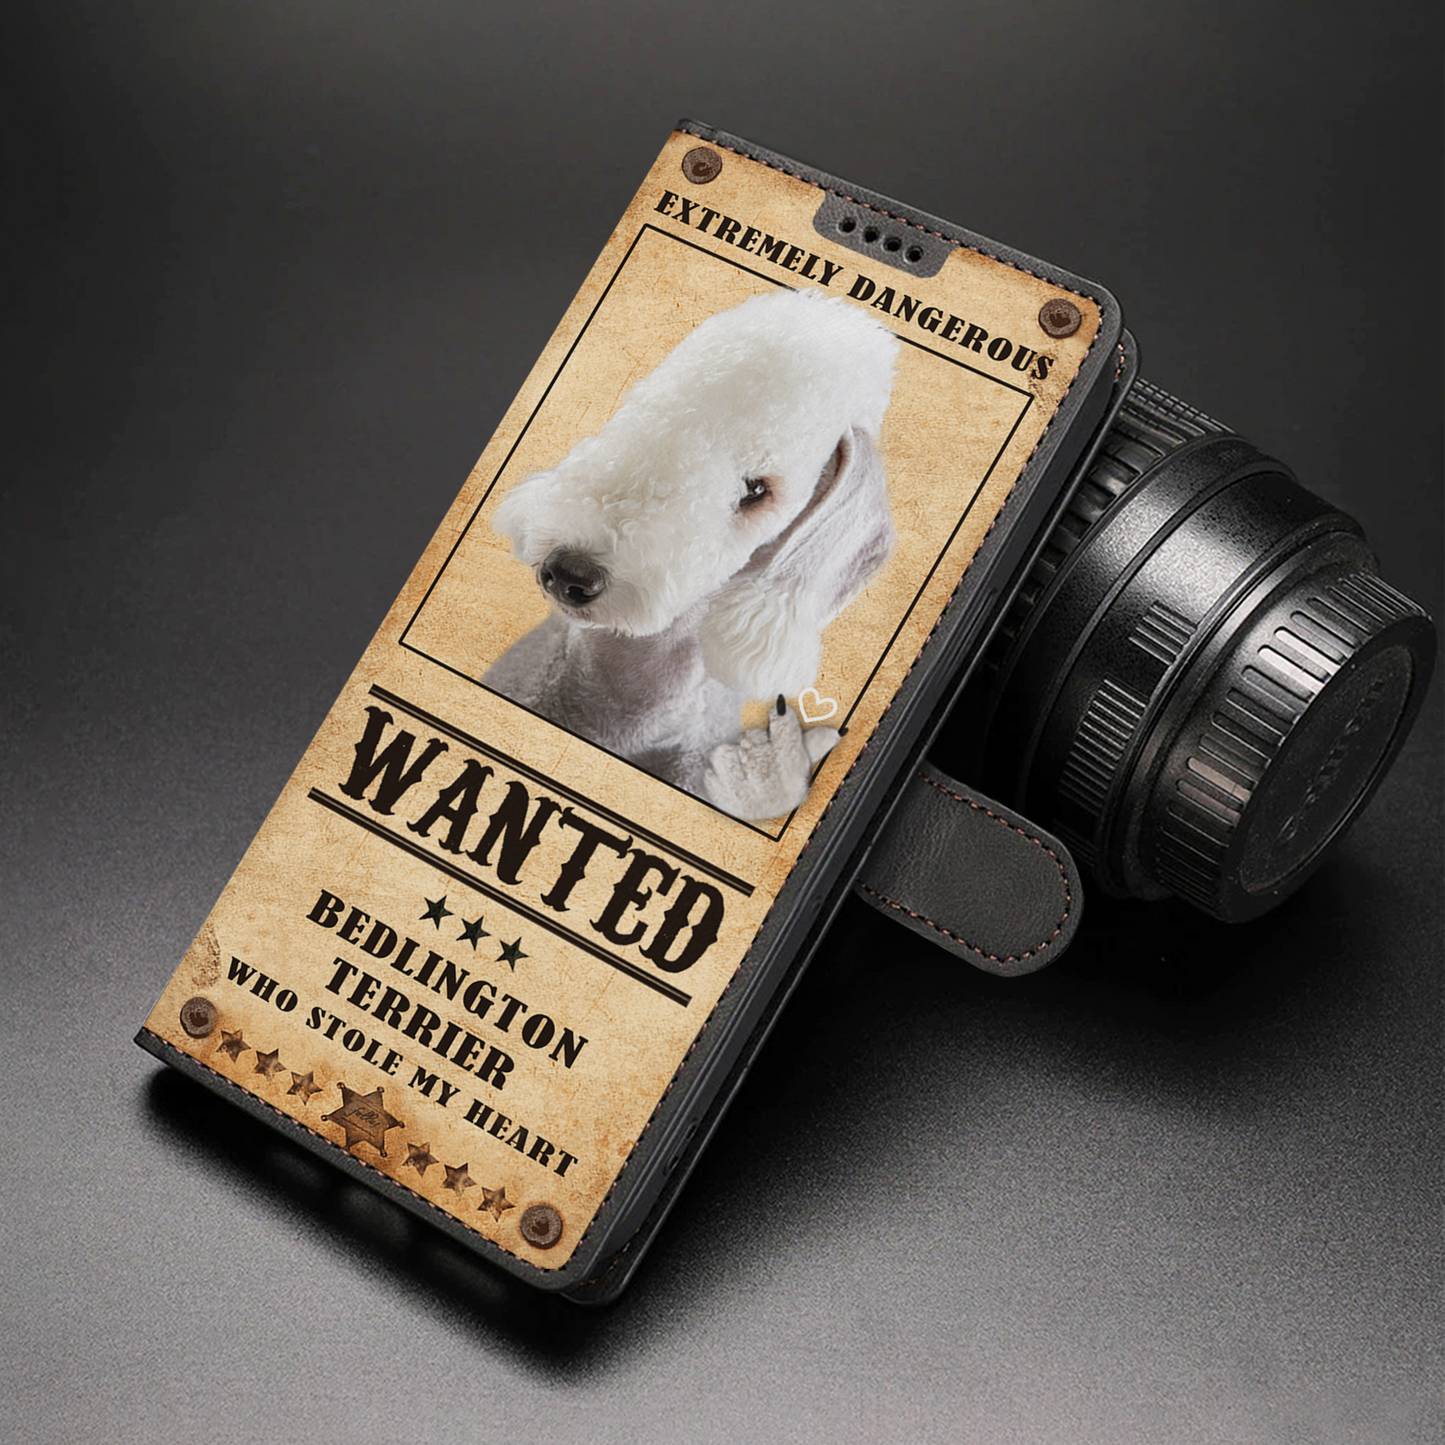 Heart Thief Bedlington Terrier - Love Inspired Wallet Phone Case V1